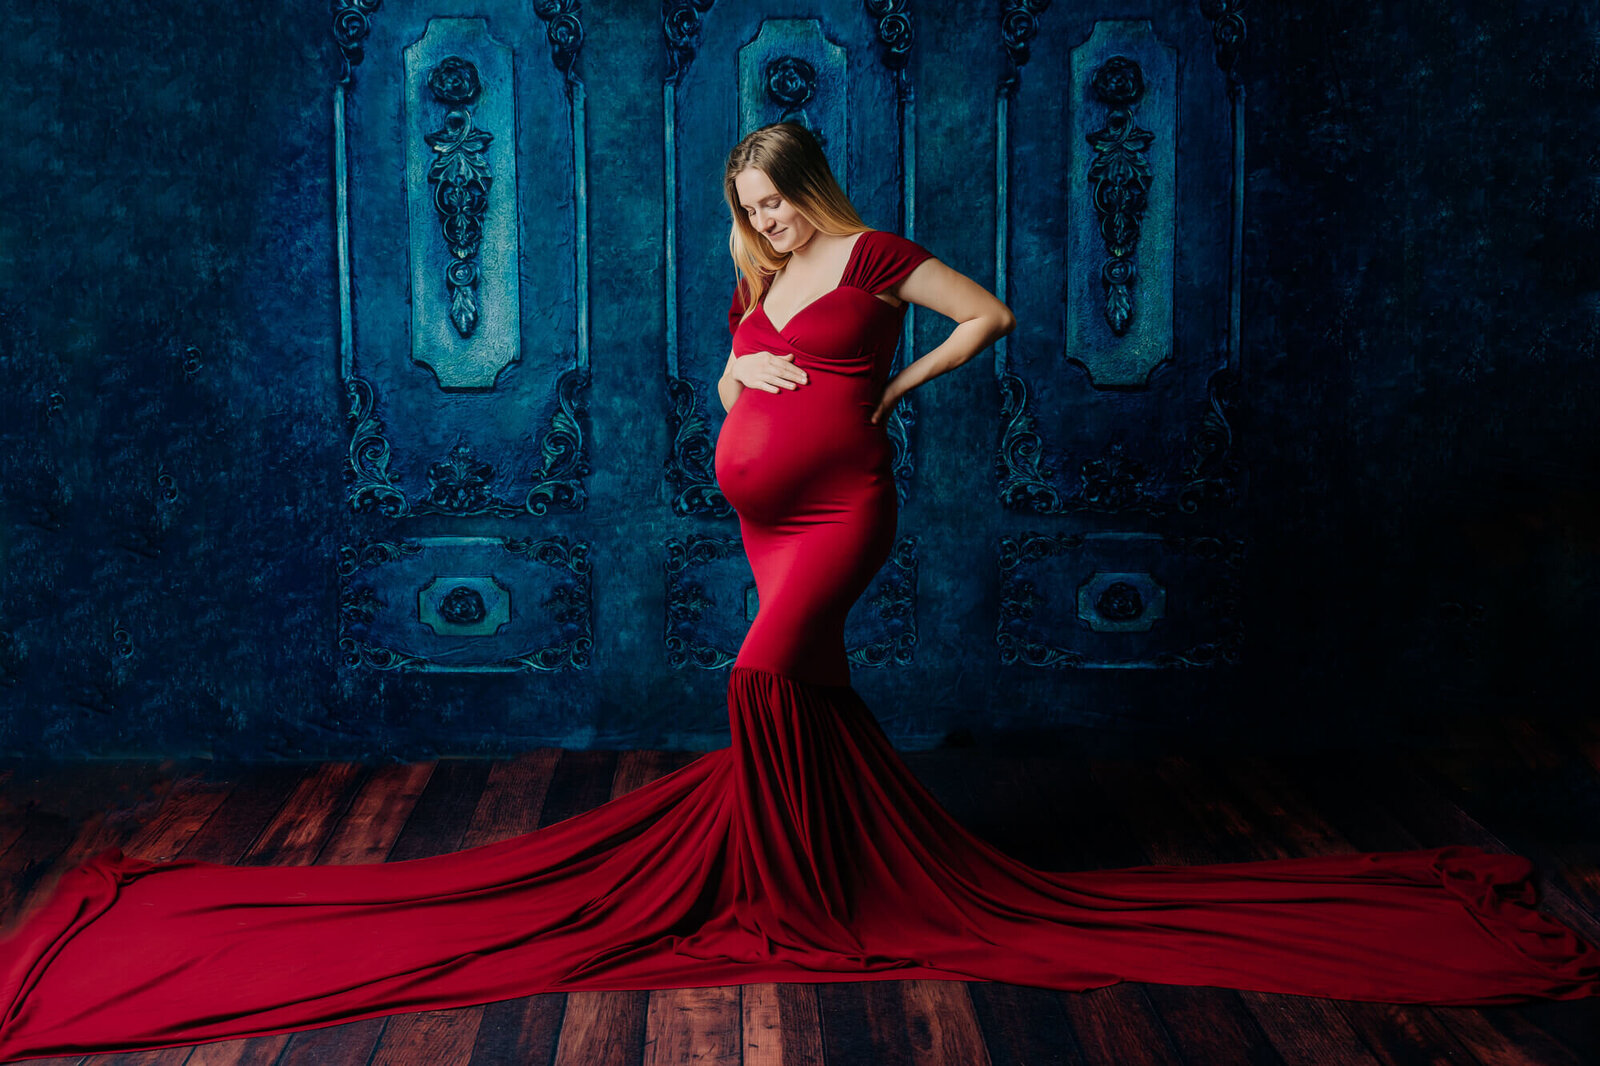 Red dress flows in session by Prescott AZ maternity photographer Melissa Byrne